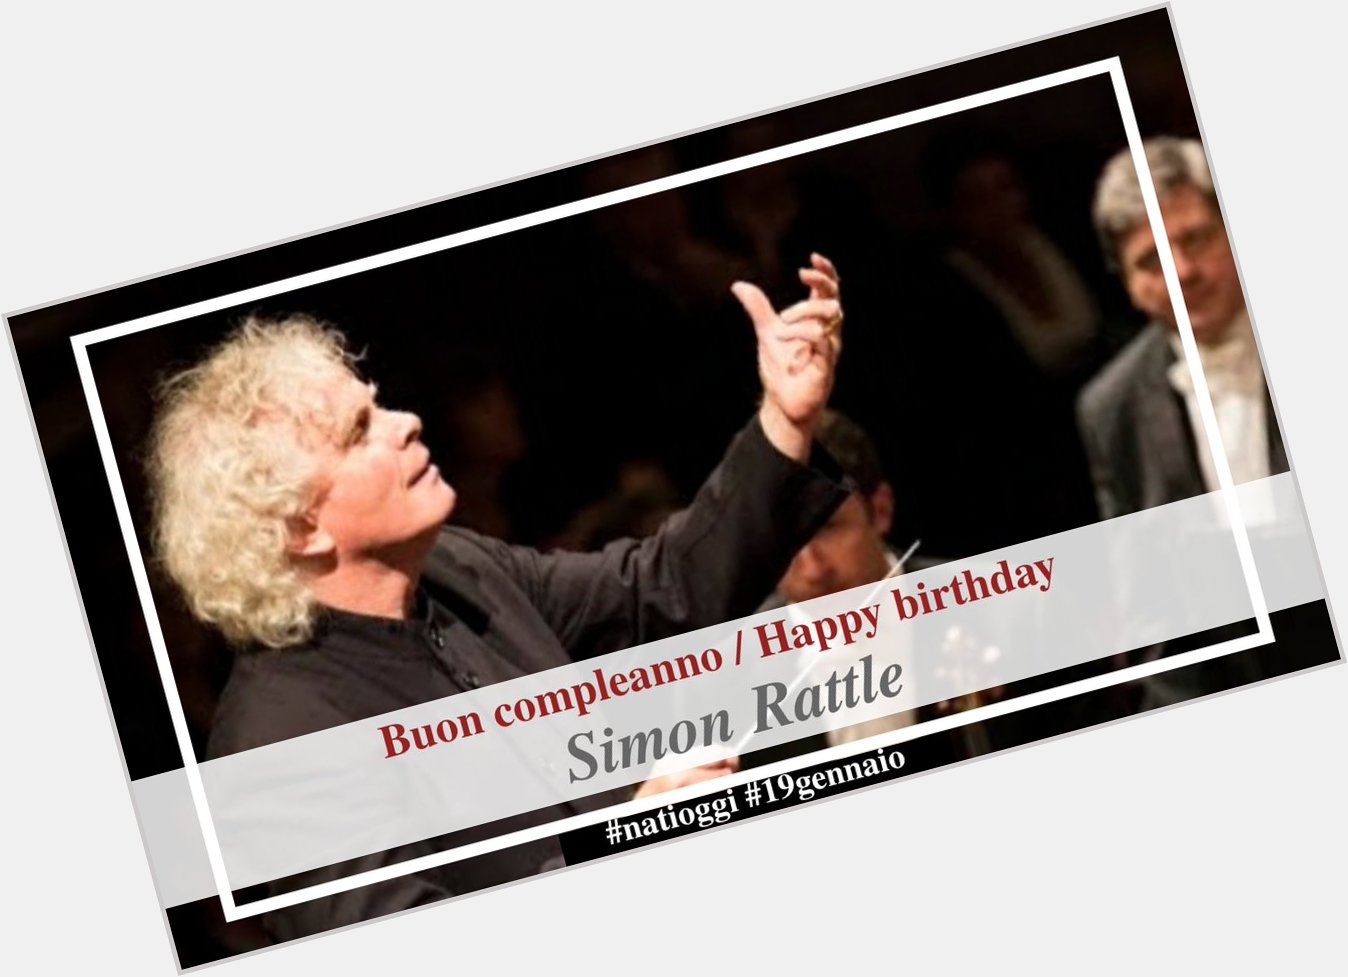 Buon compleanno / Happy birthday Simon Rattle 